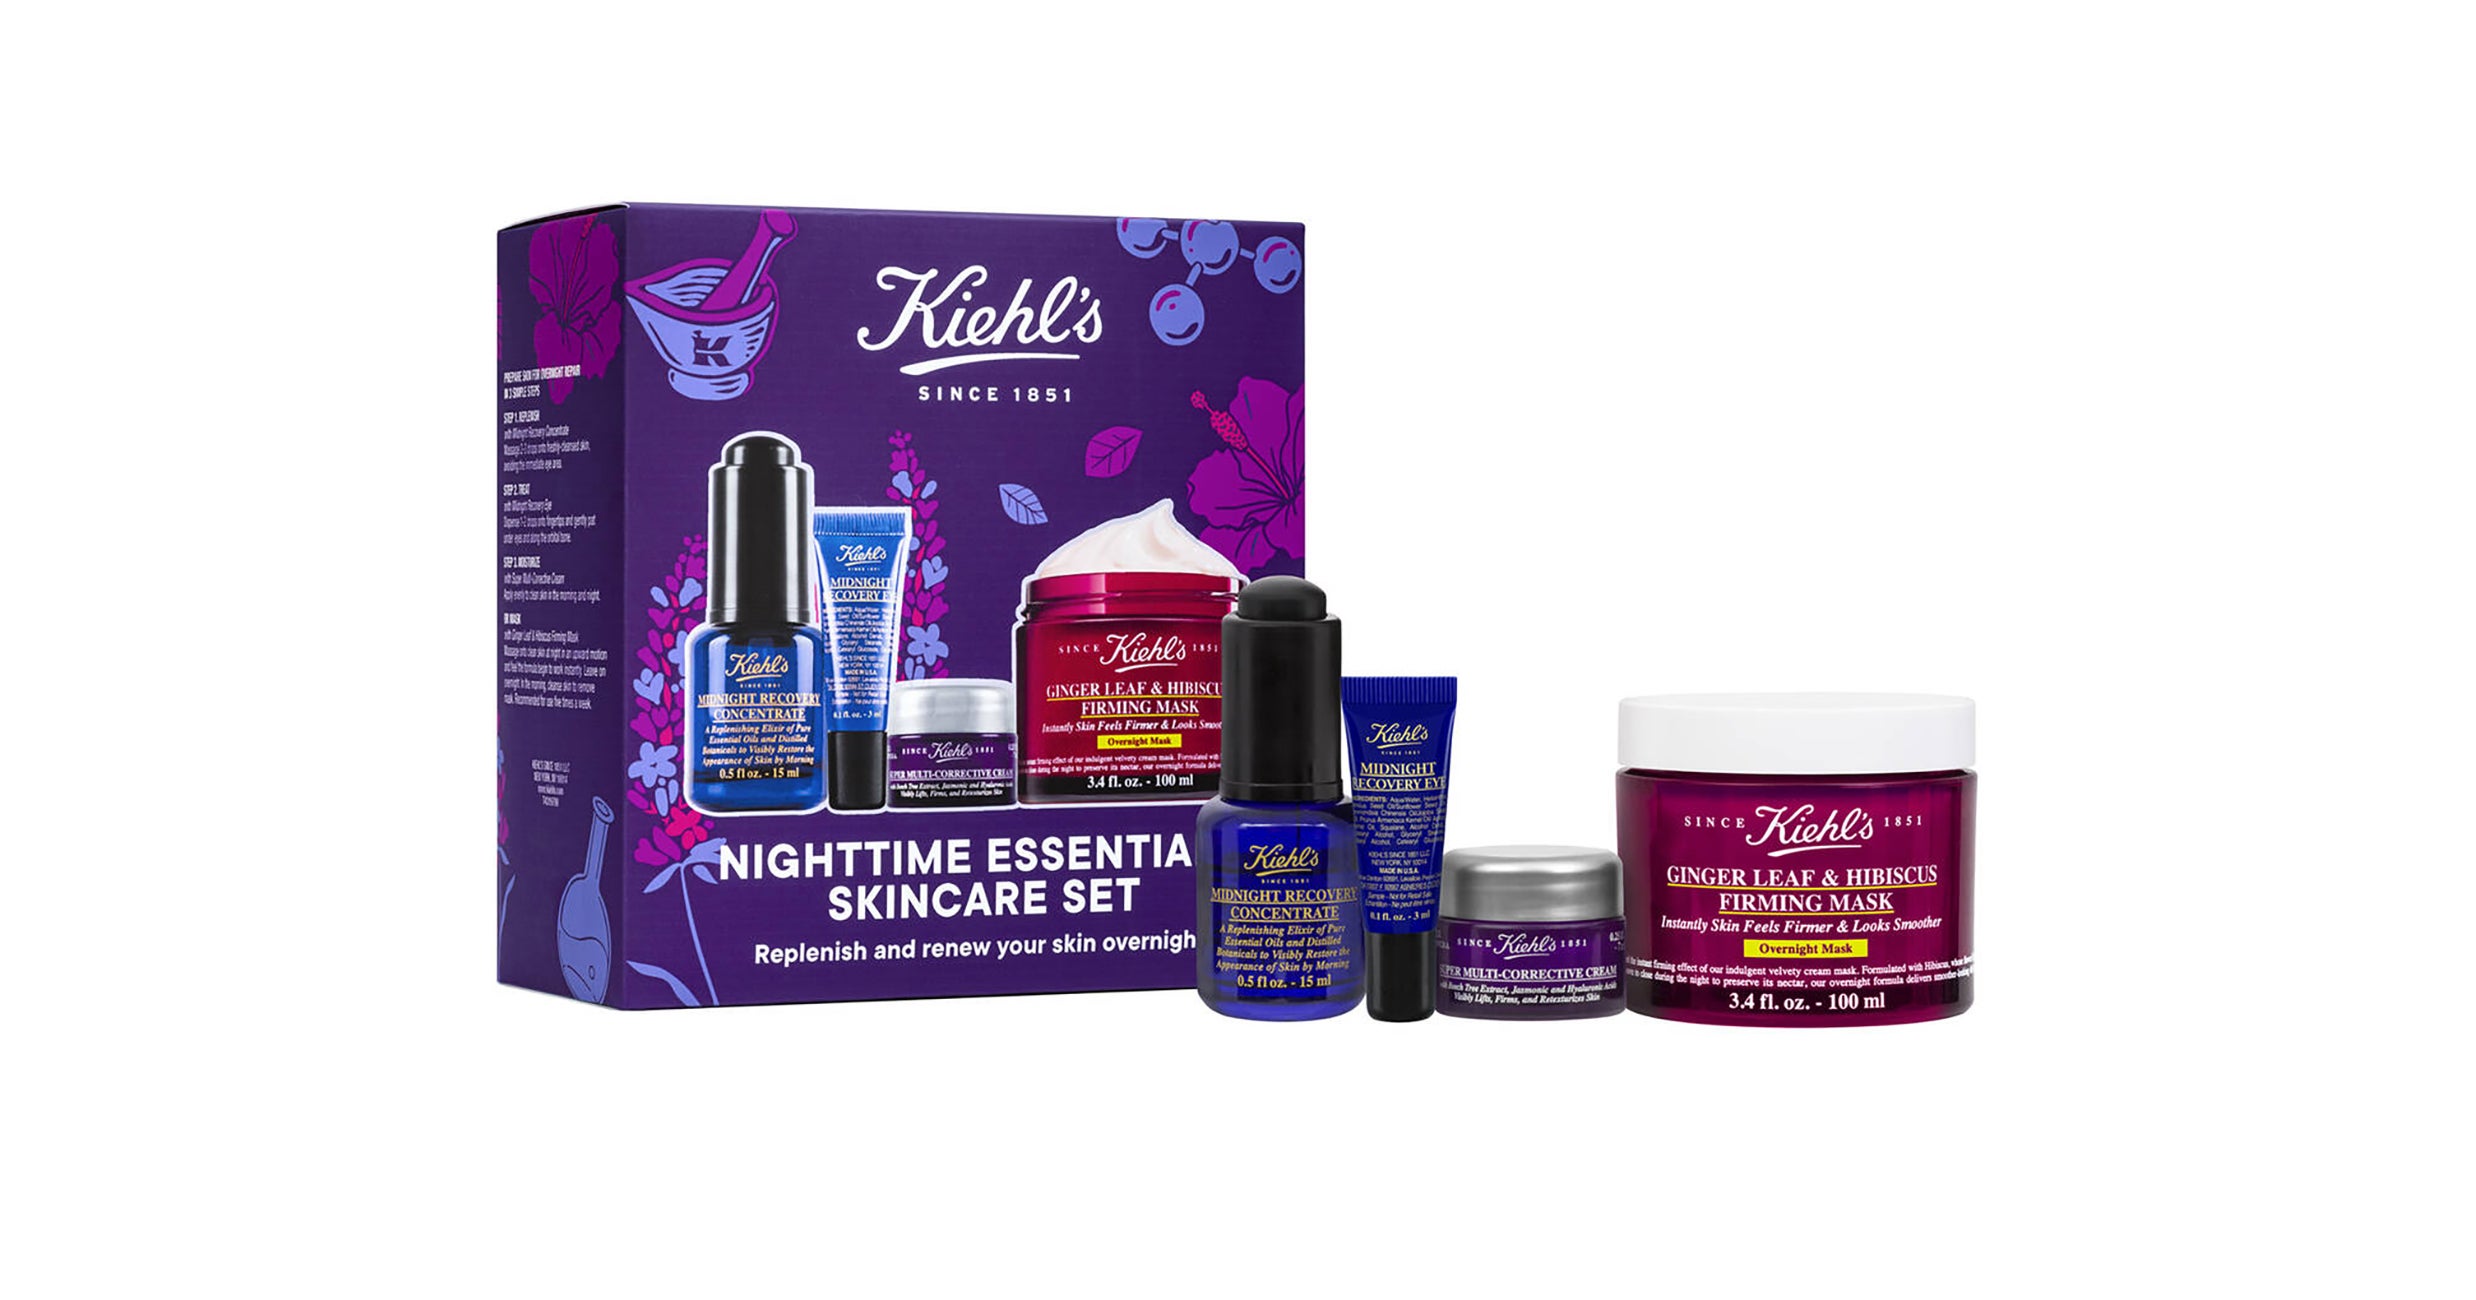 Kiehls Skin Care Sale Offers 40 Off Best Selling Sets